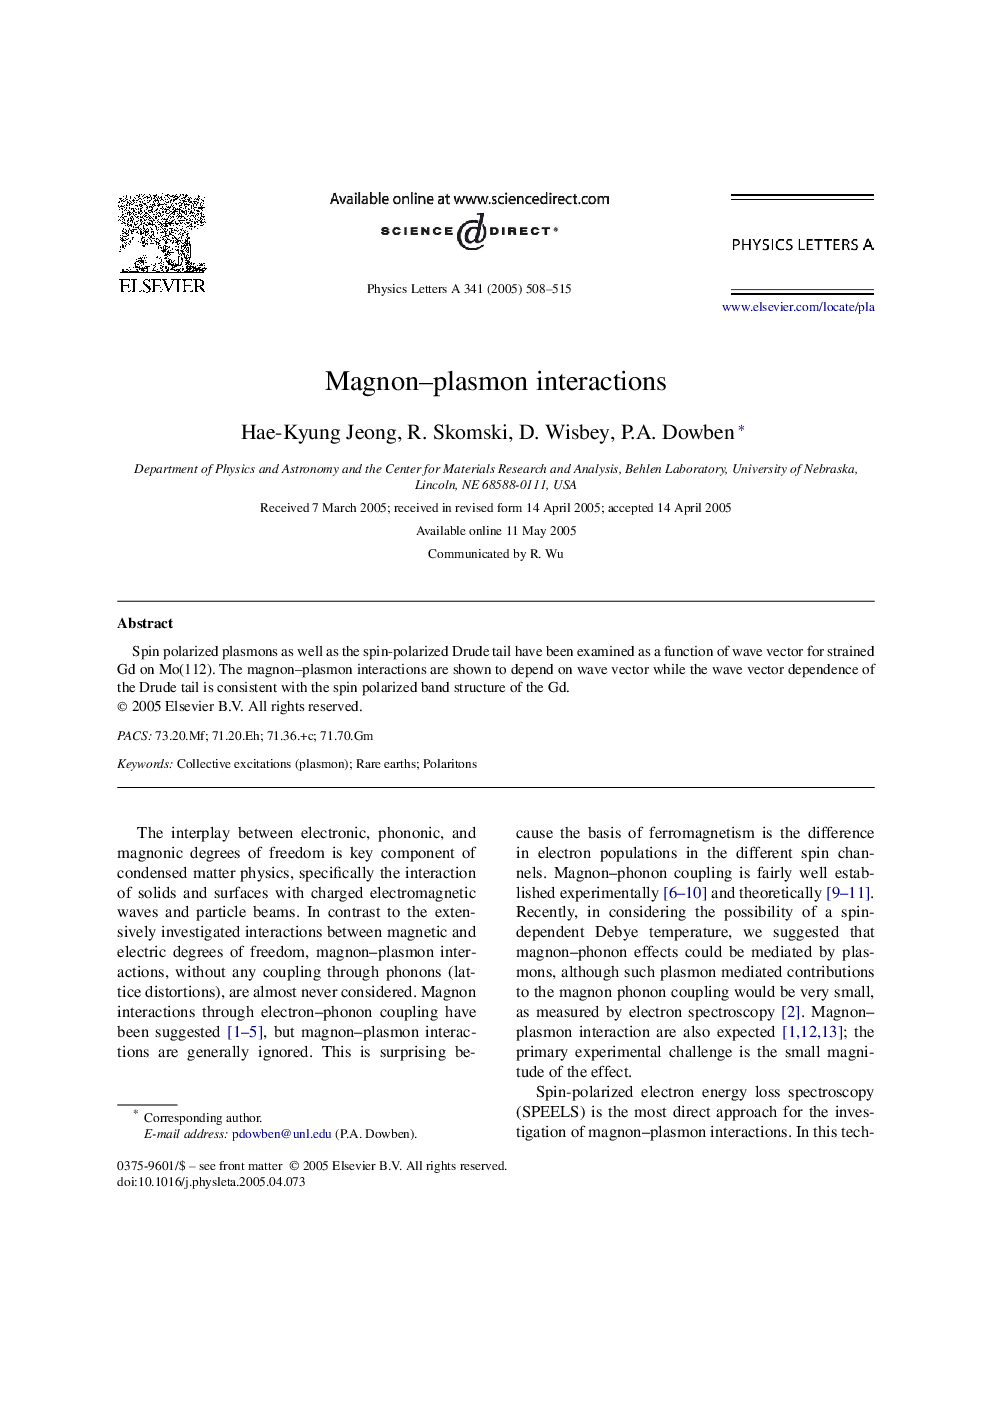 Magnon-plasmon interactions